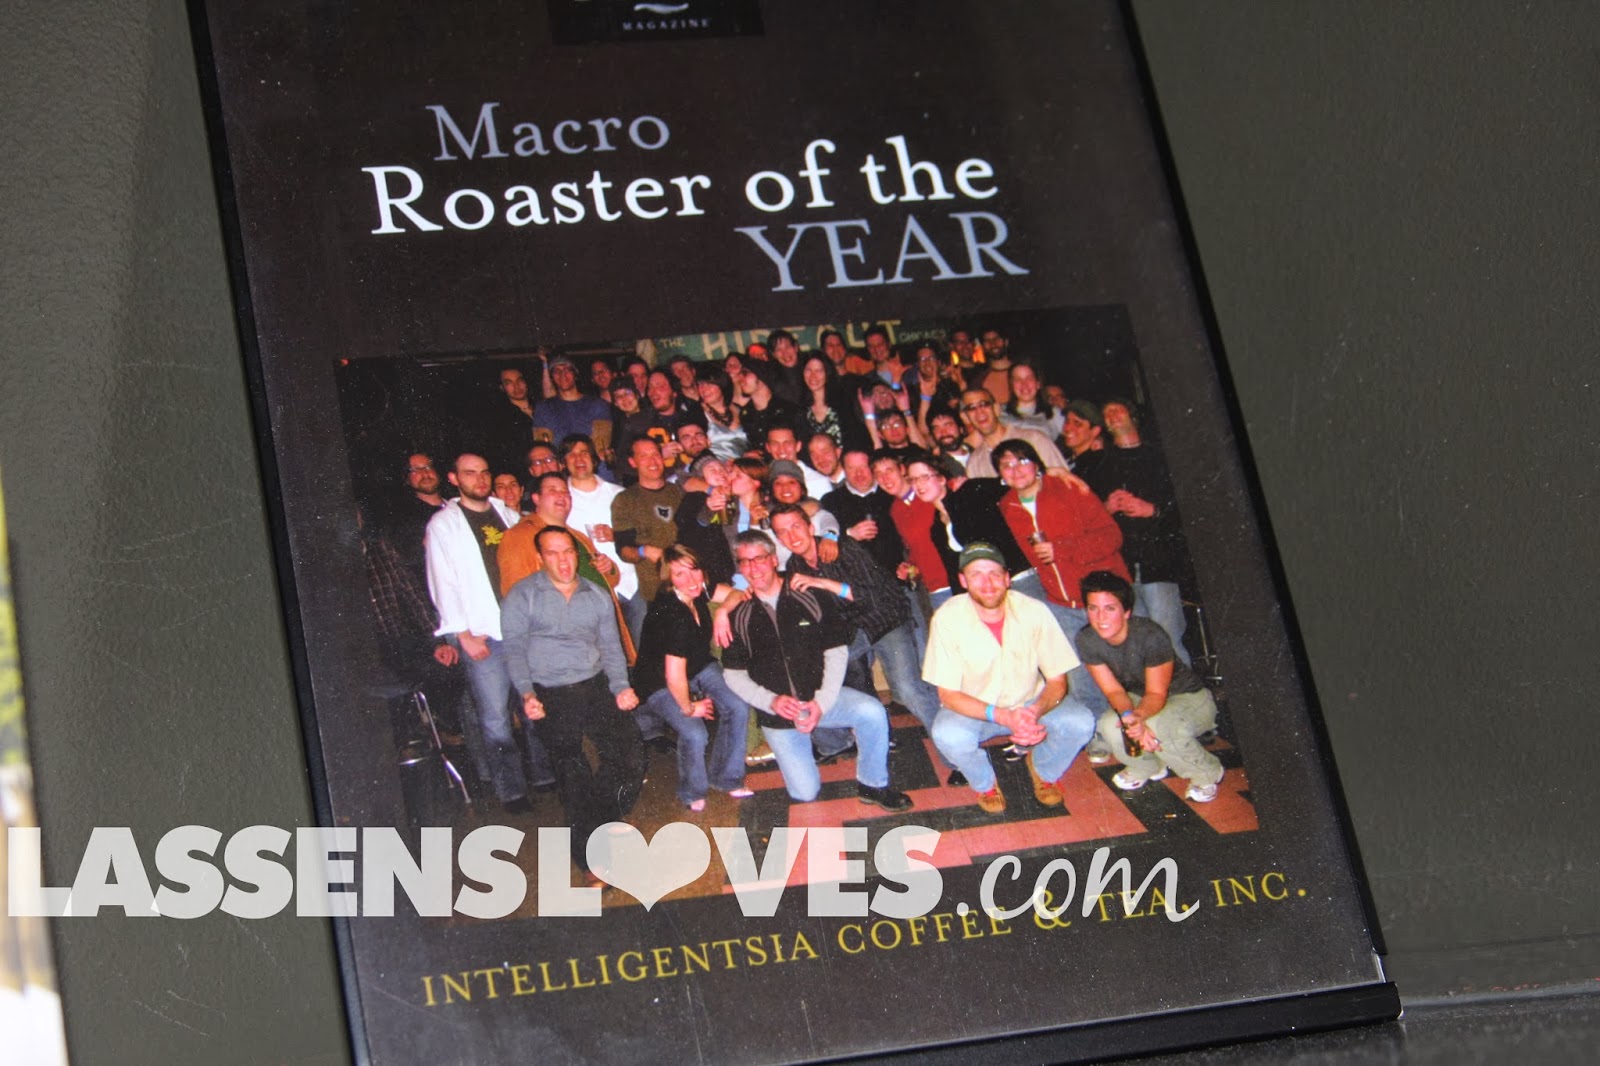 lassensloves.com, Lassen's, Intelligensia+Coffee, Coffee+Roasting, Coffee+tasting, Coffee+Cupping